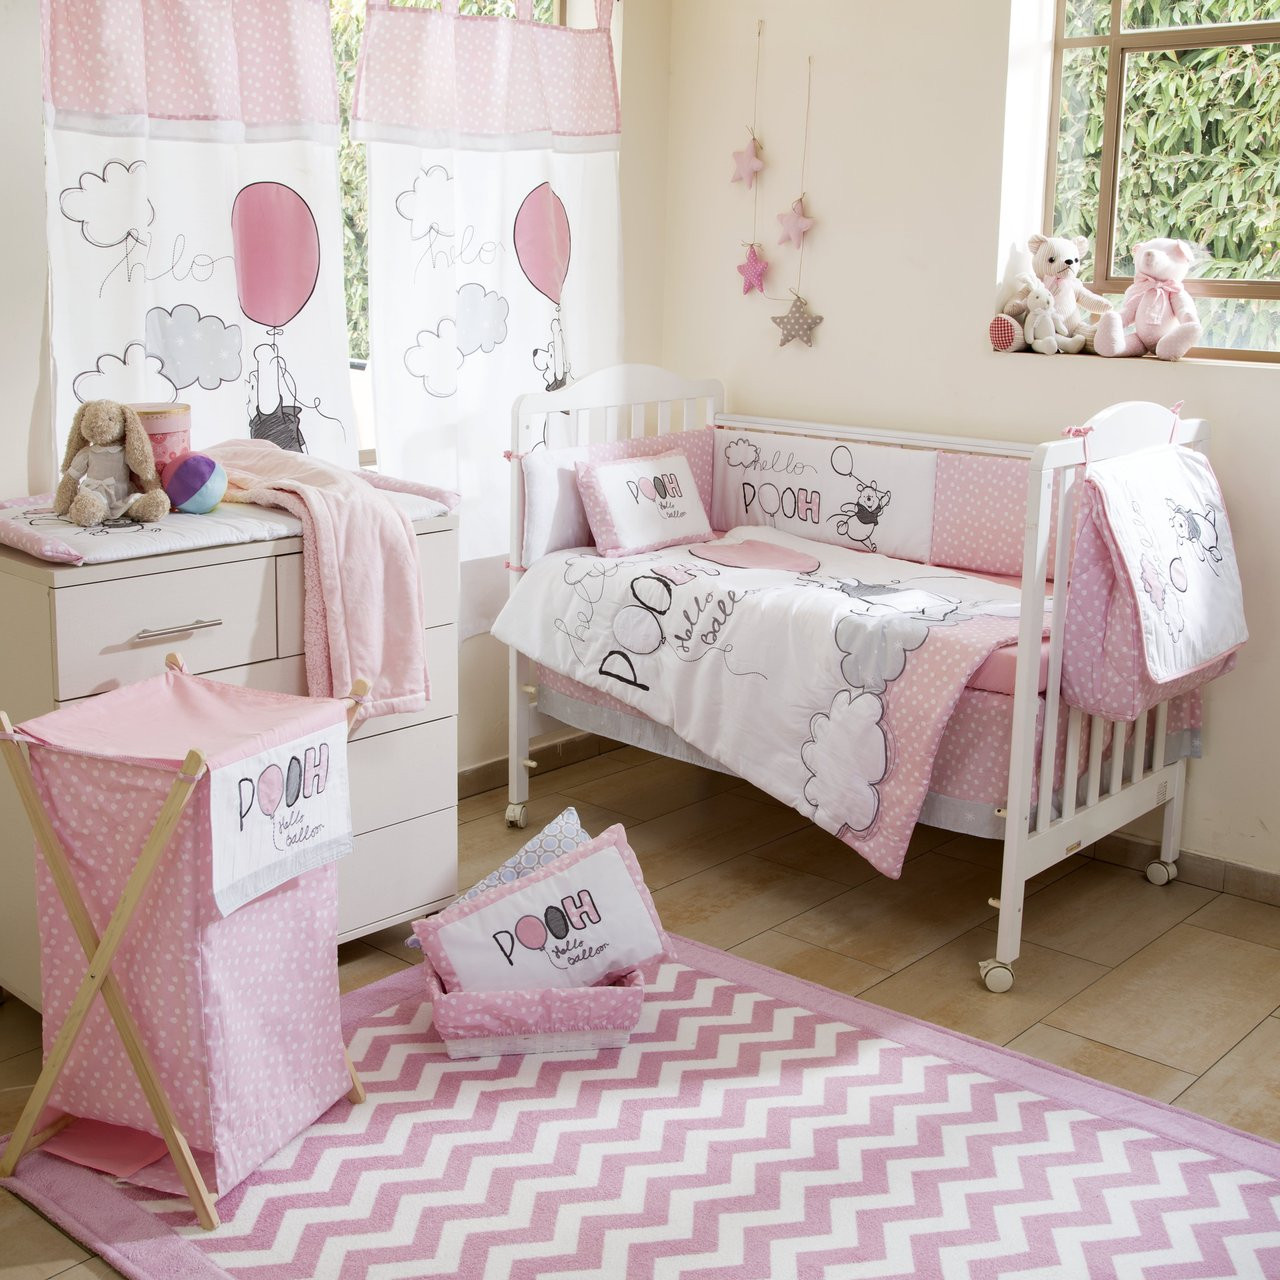 Winnie The Pooh Baby Decor
 Disney Pink Winnie The Pooh Play Crib Bedding Set Petagad